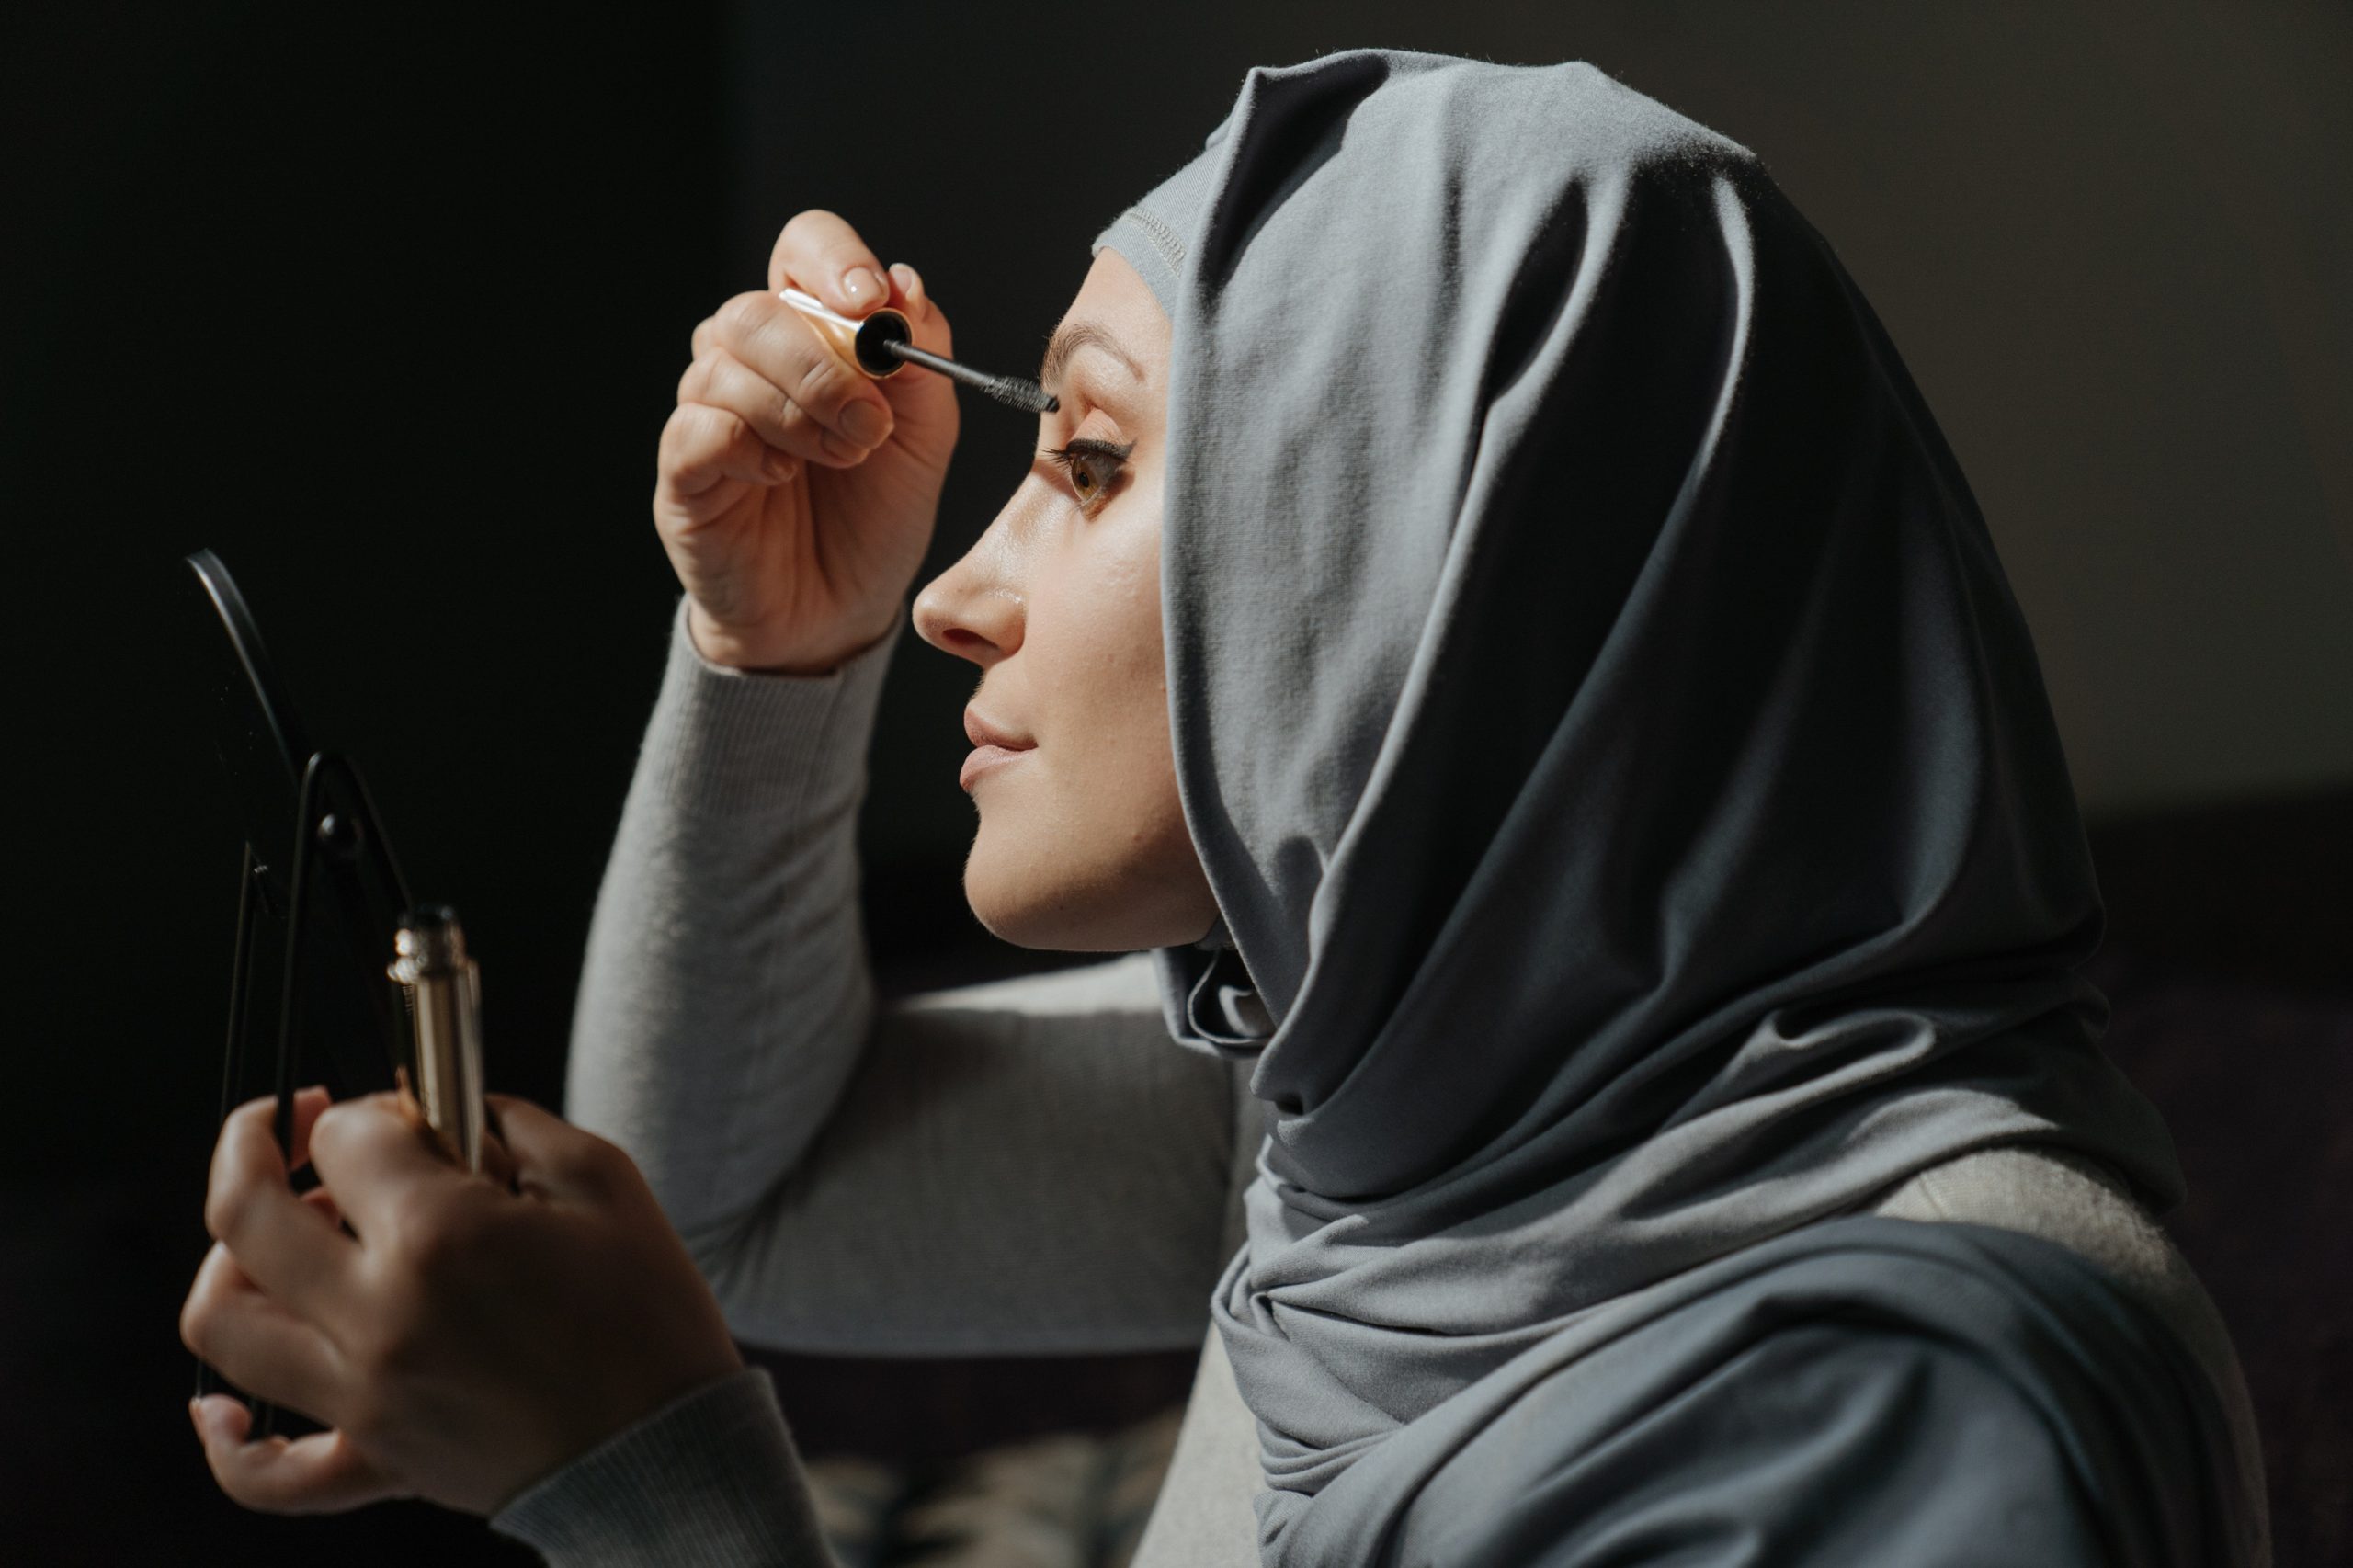 Woman wearing grey hijab applies a waterproof mascara